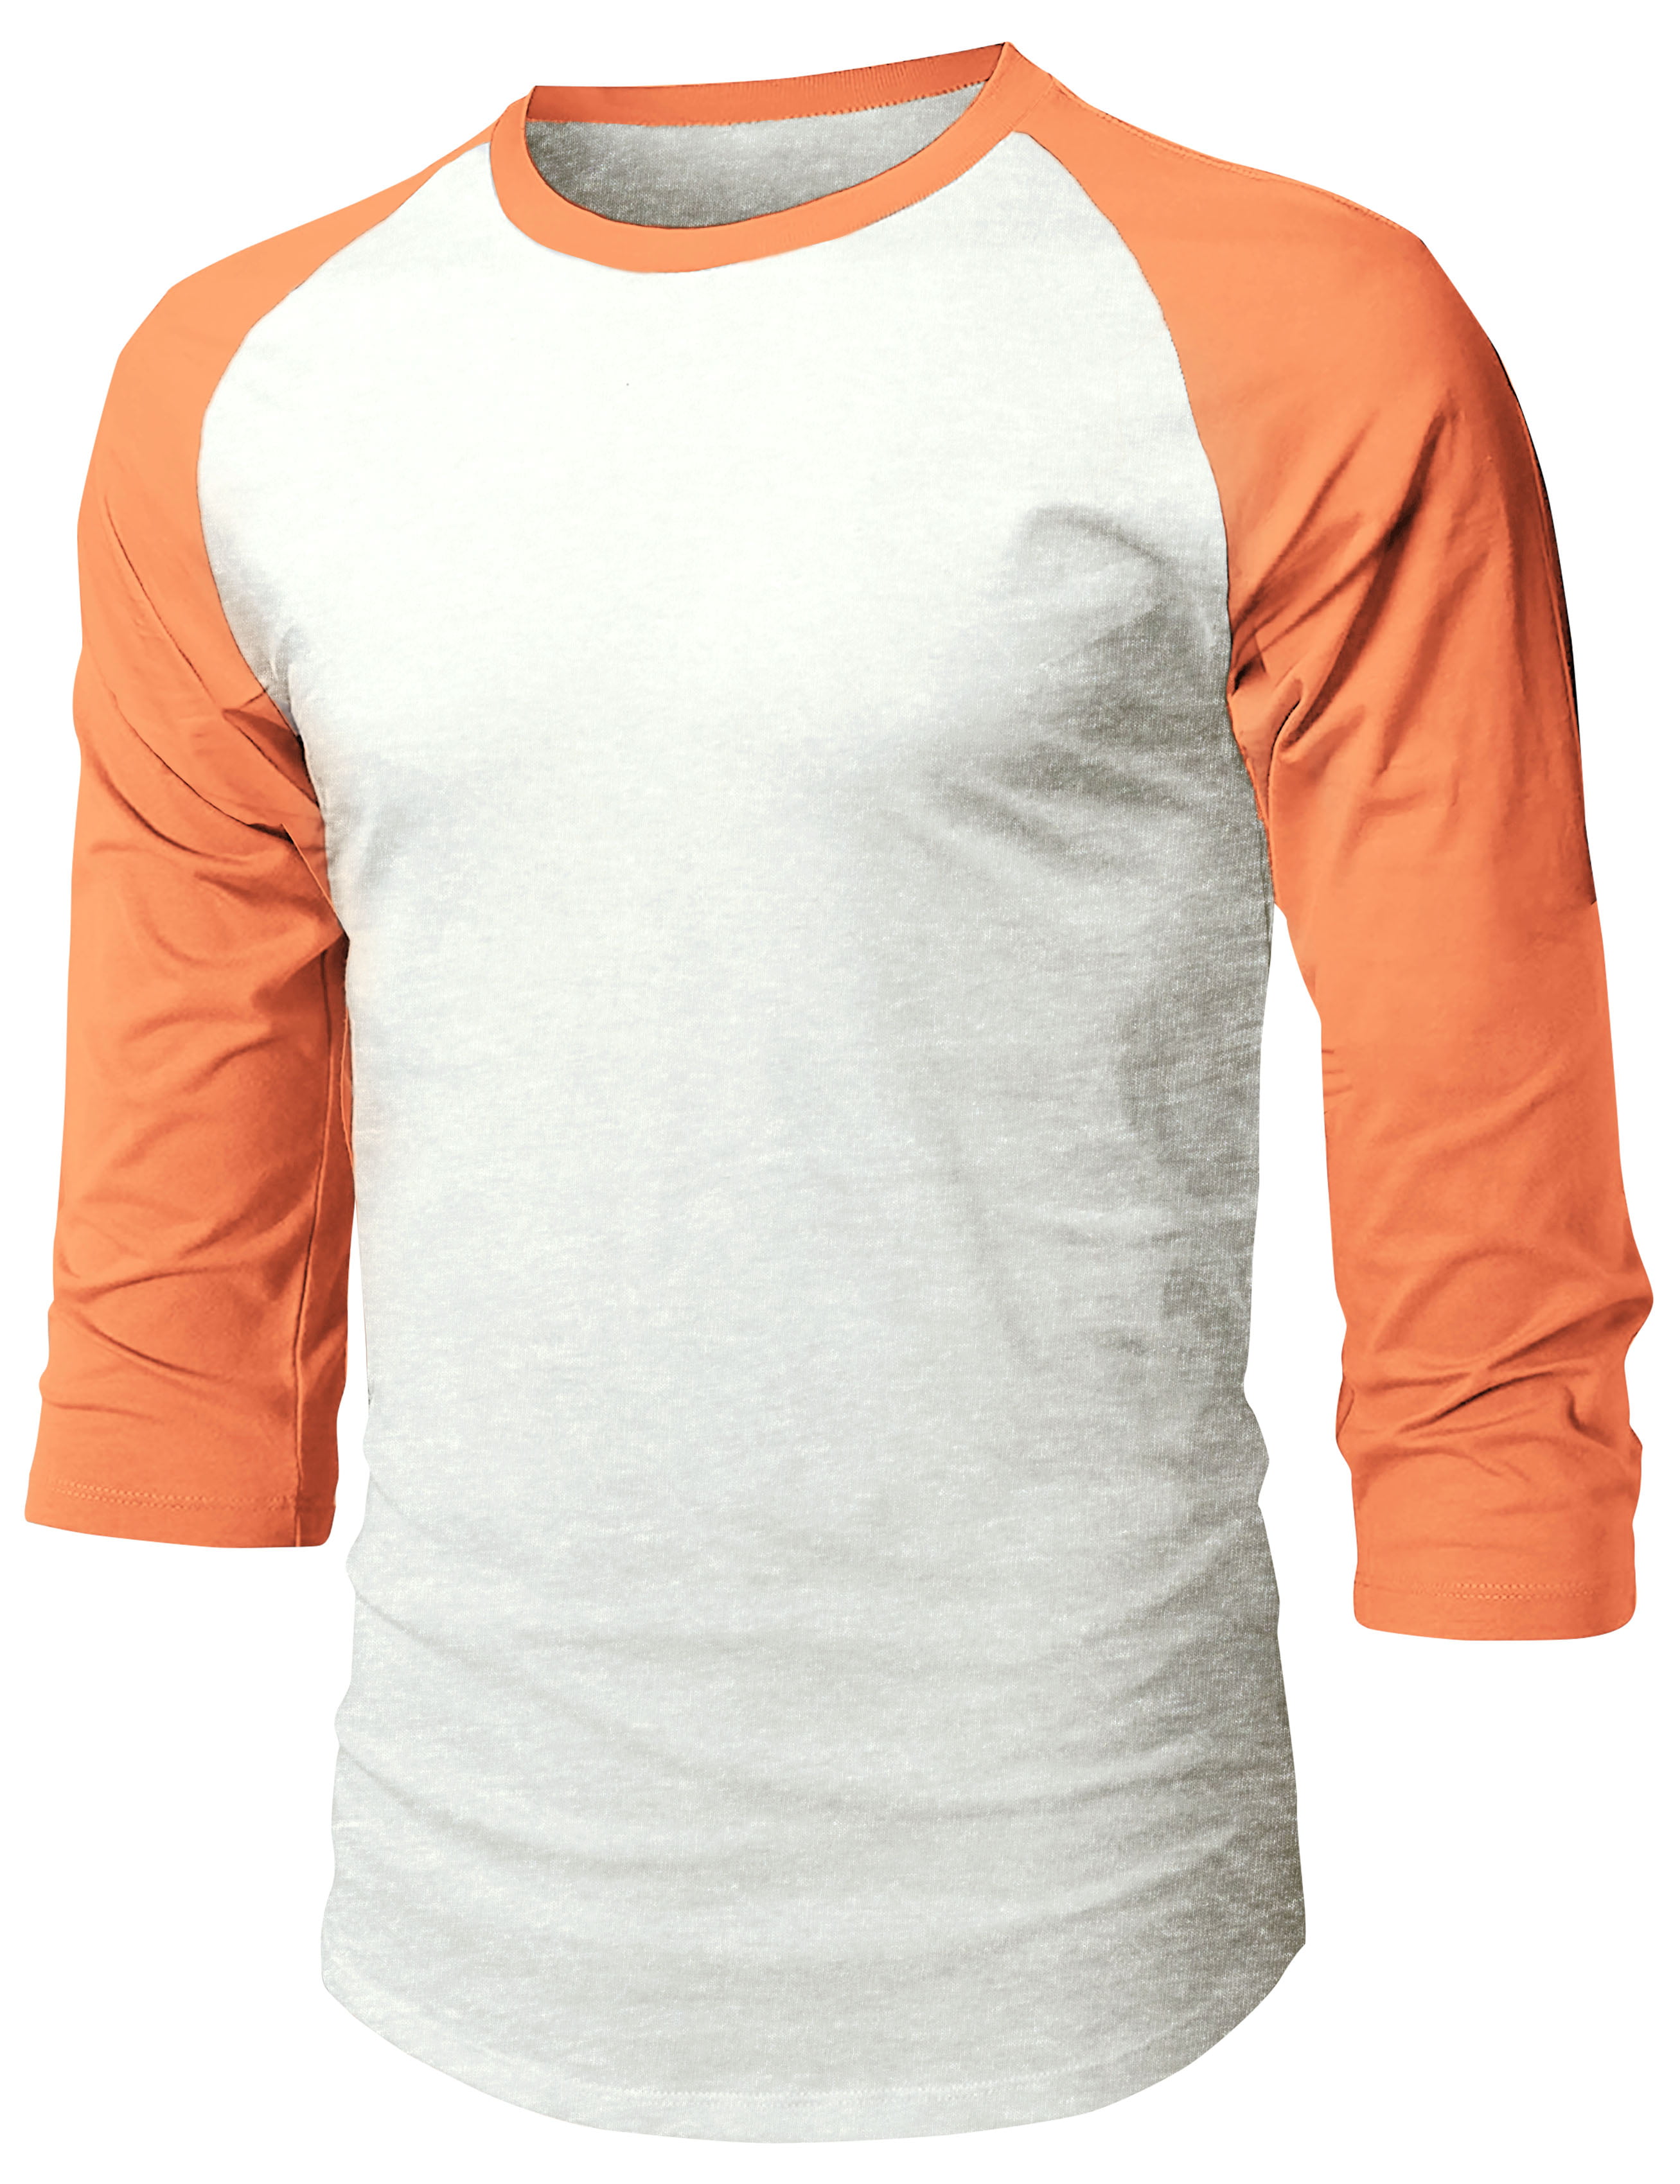 shirts Team Sports Jersey Tee  S~3XL Raglan 3/4 Sleeve Cotton Plain Baseball T